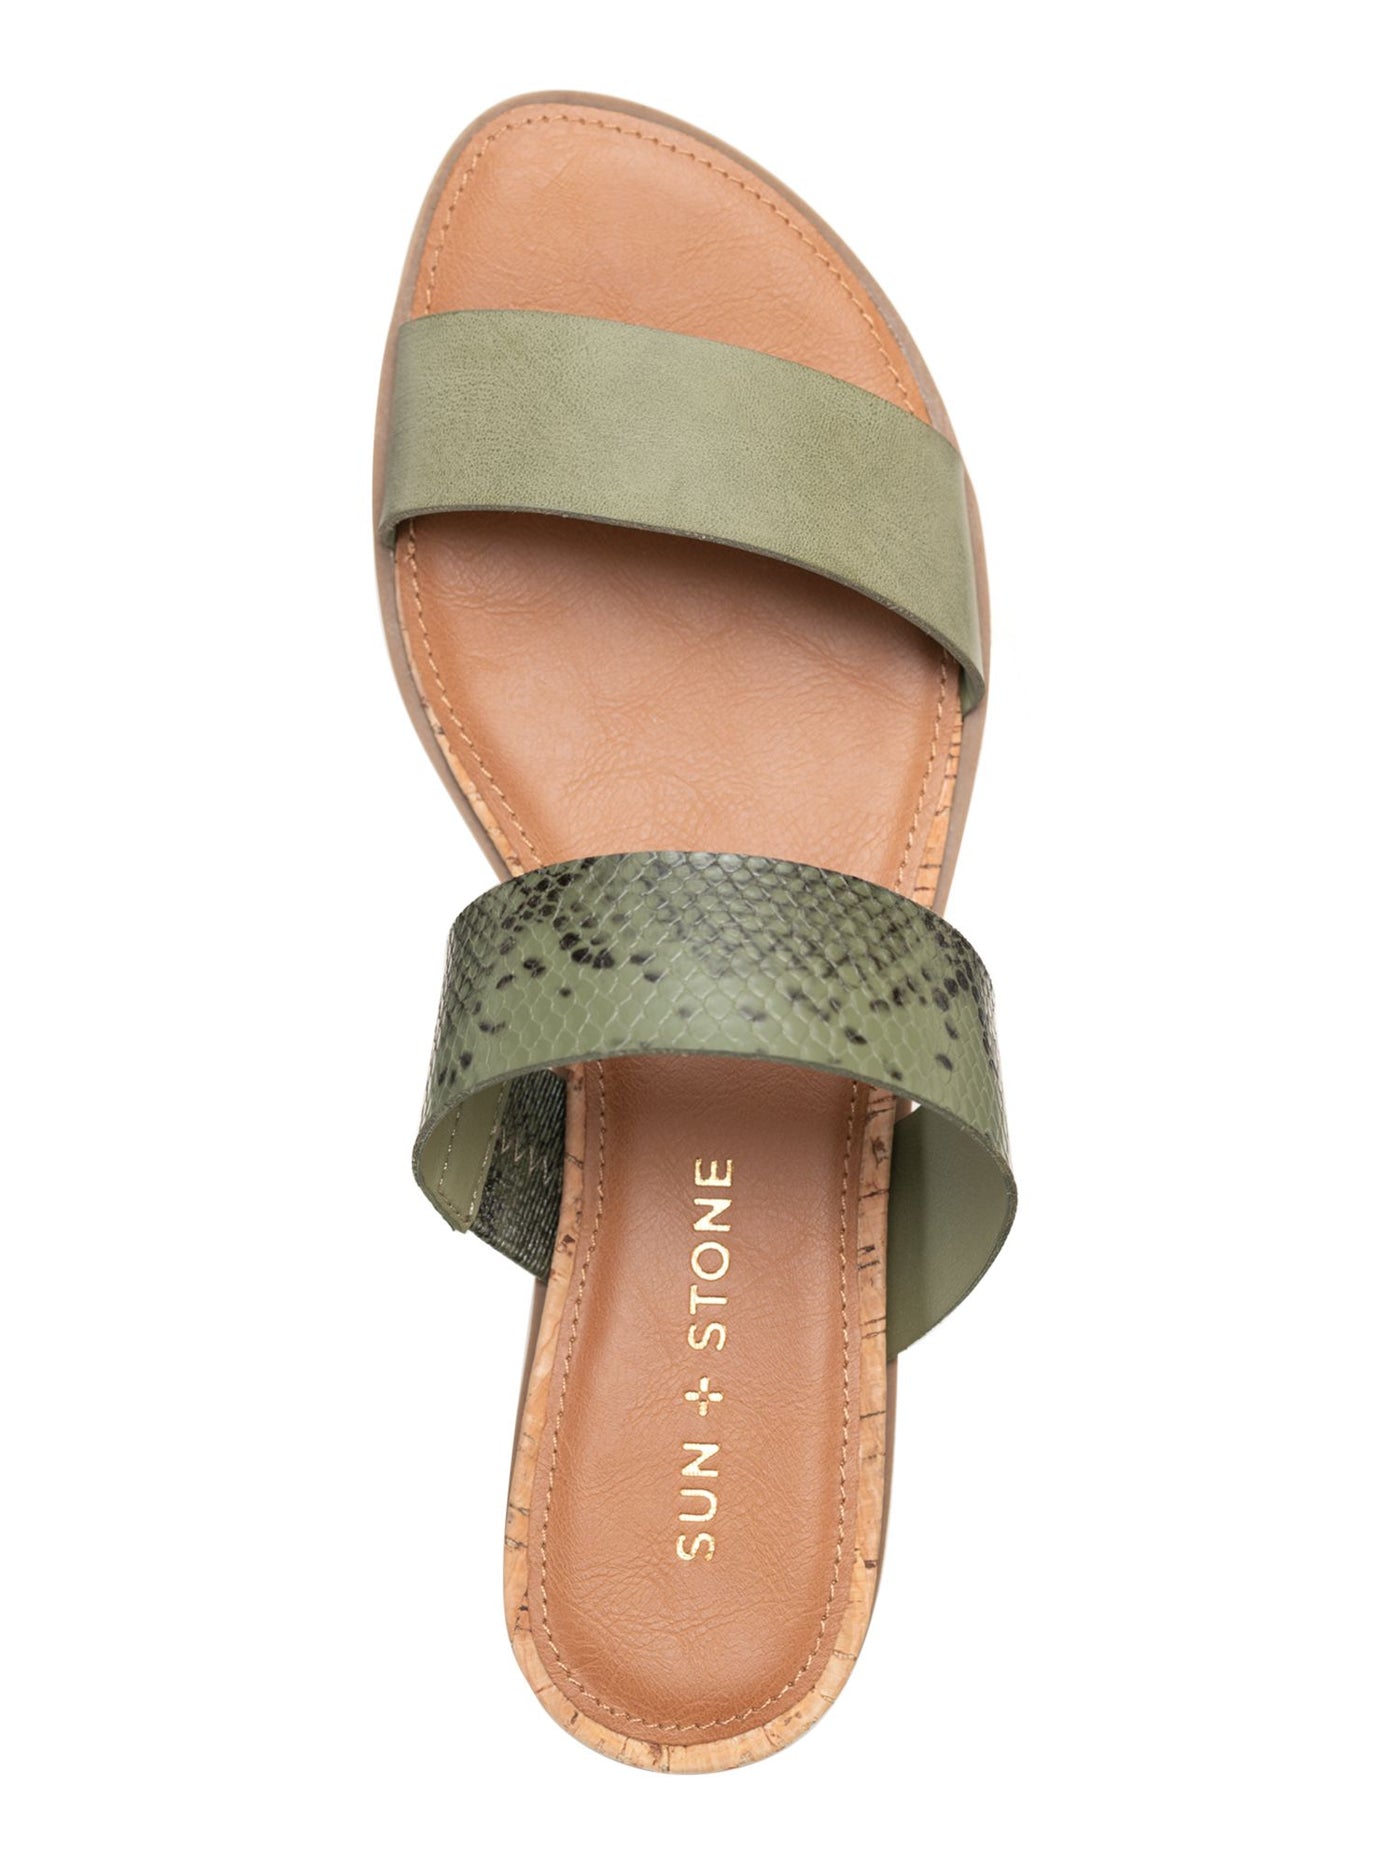 SUN STONE Womens Green Snakeskin Cushioned Slip Resistant Easten Round Toe Wedge Slip On Slide Sandals Shoes 9.5 M